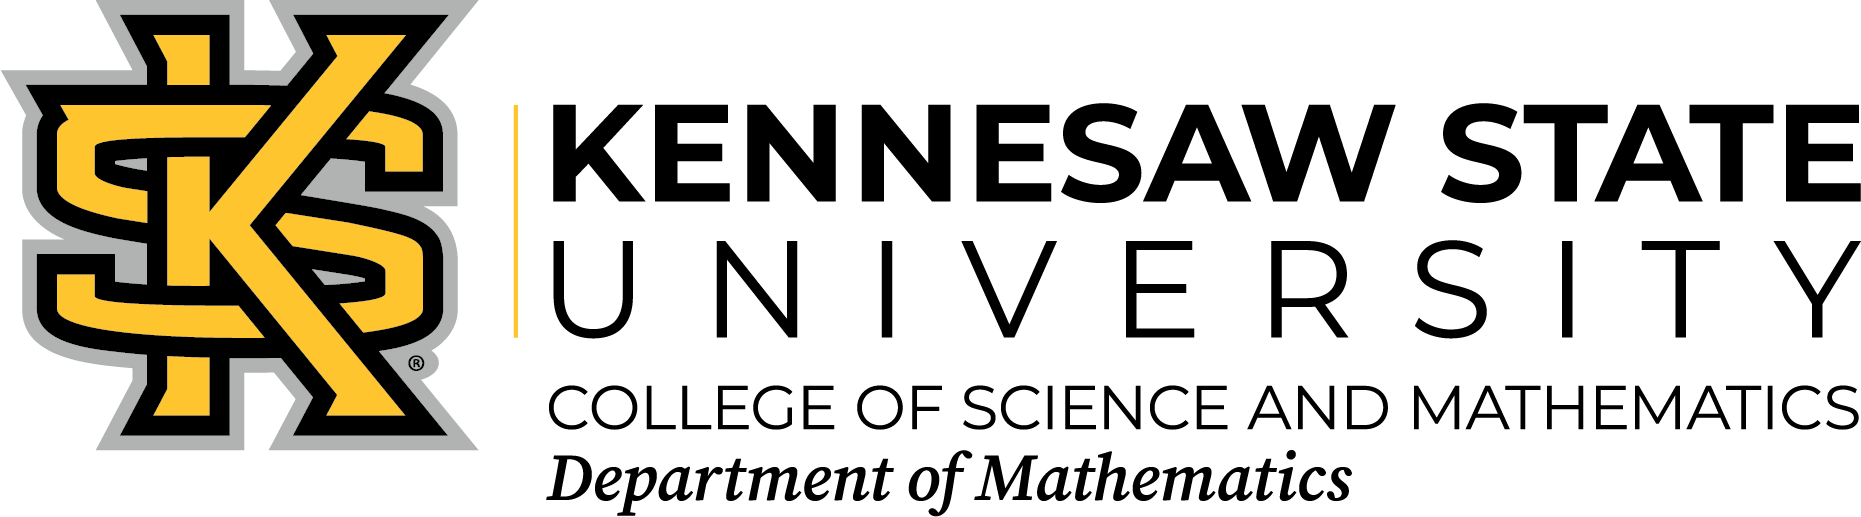 Department of Mathematics logo